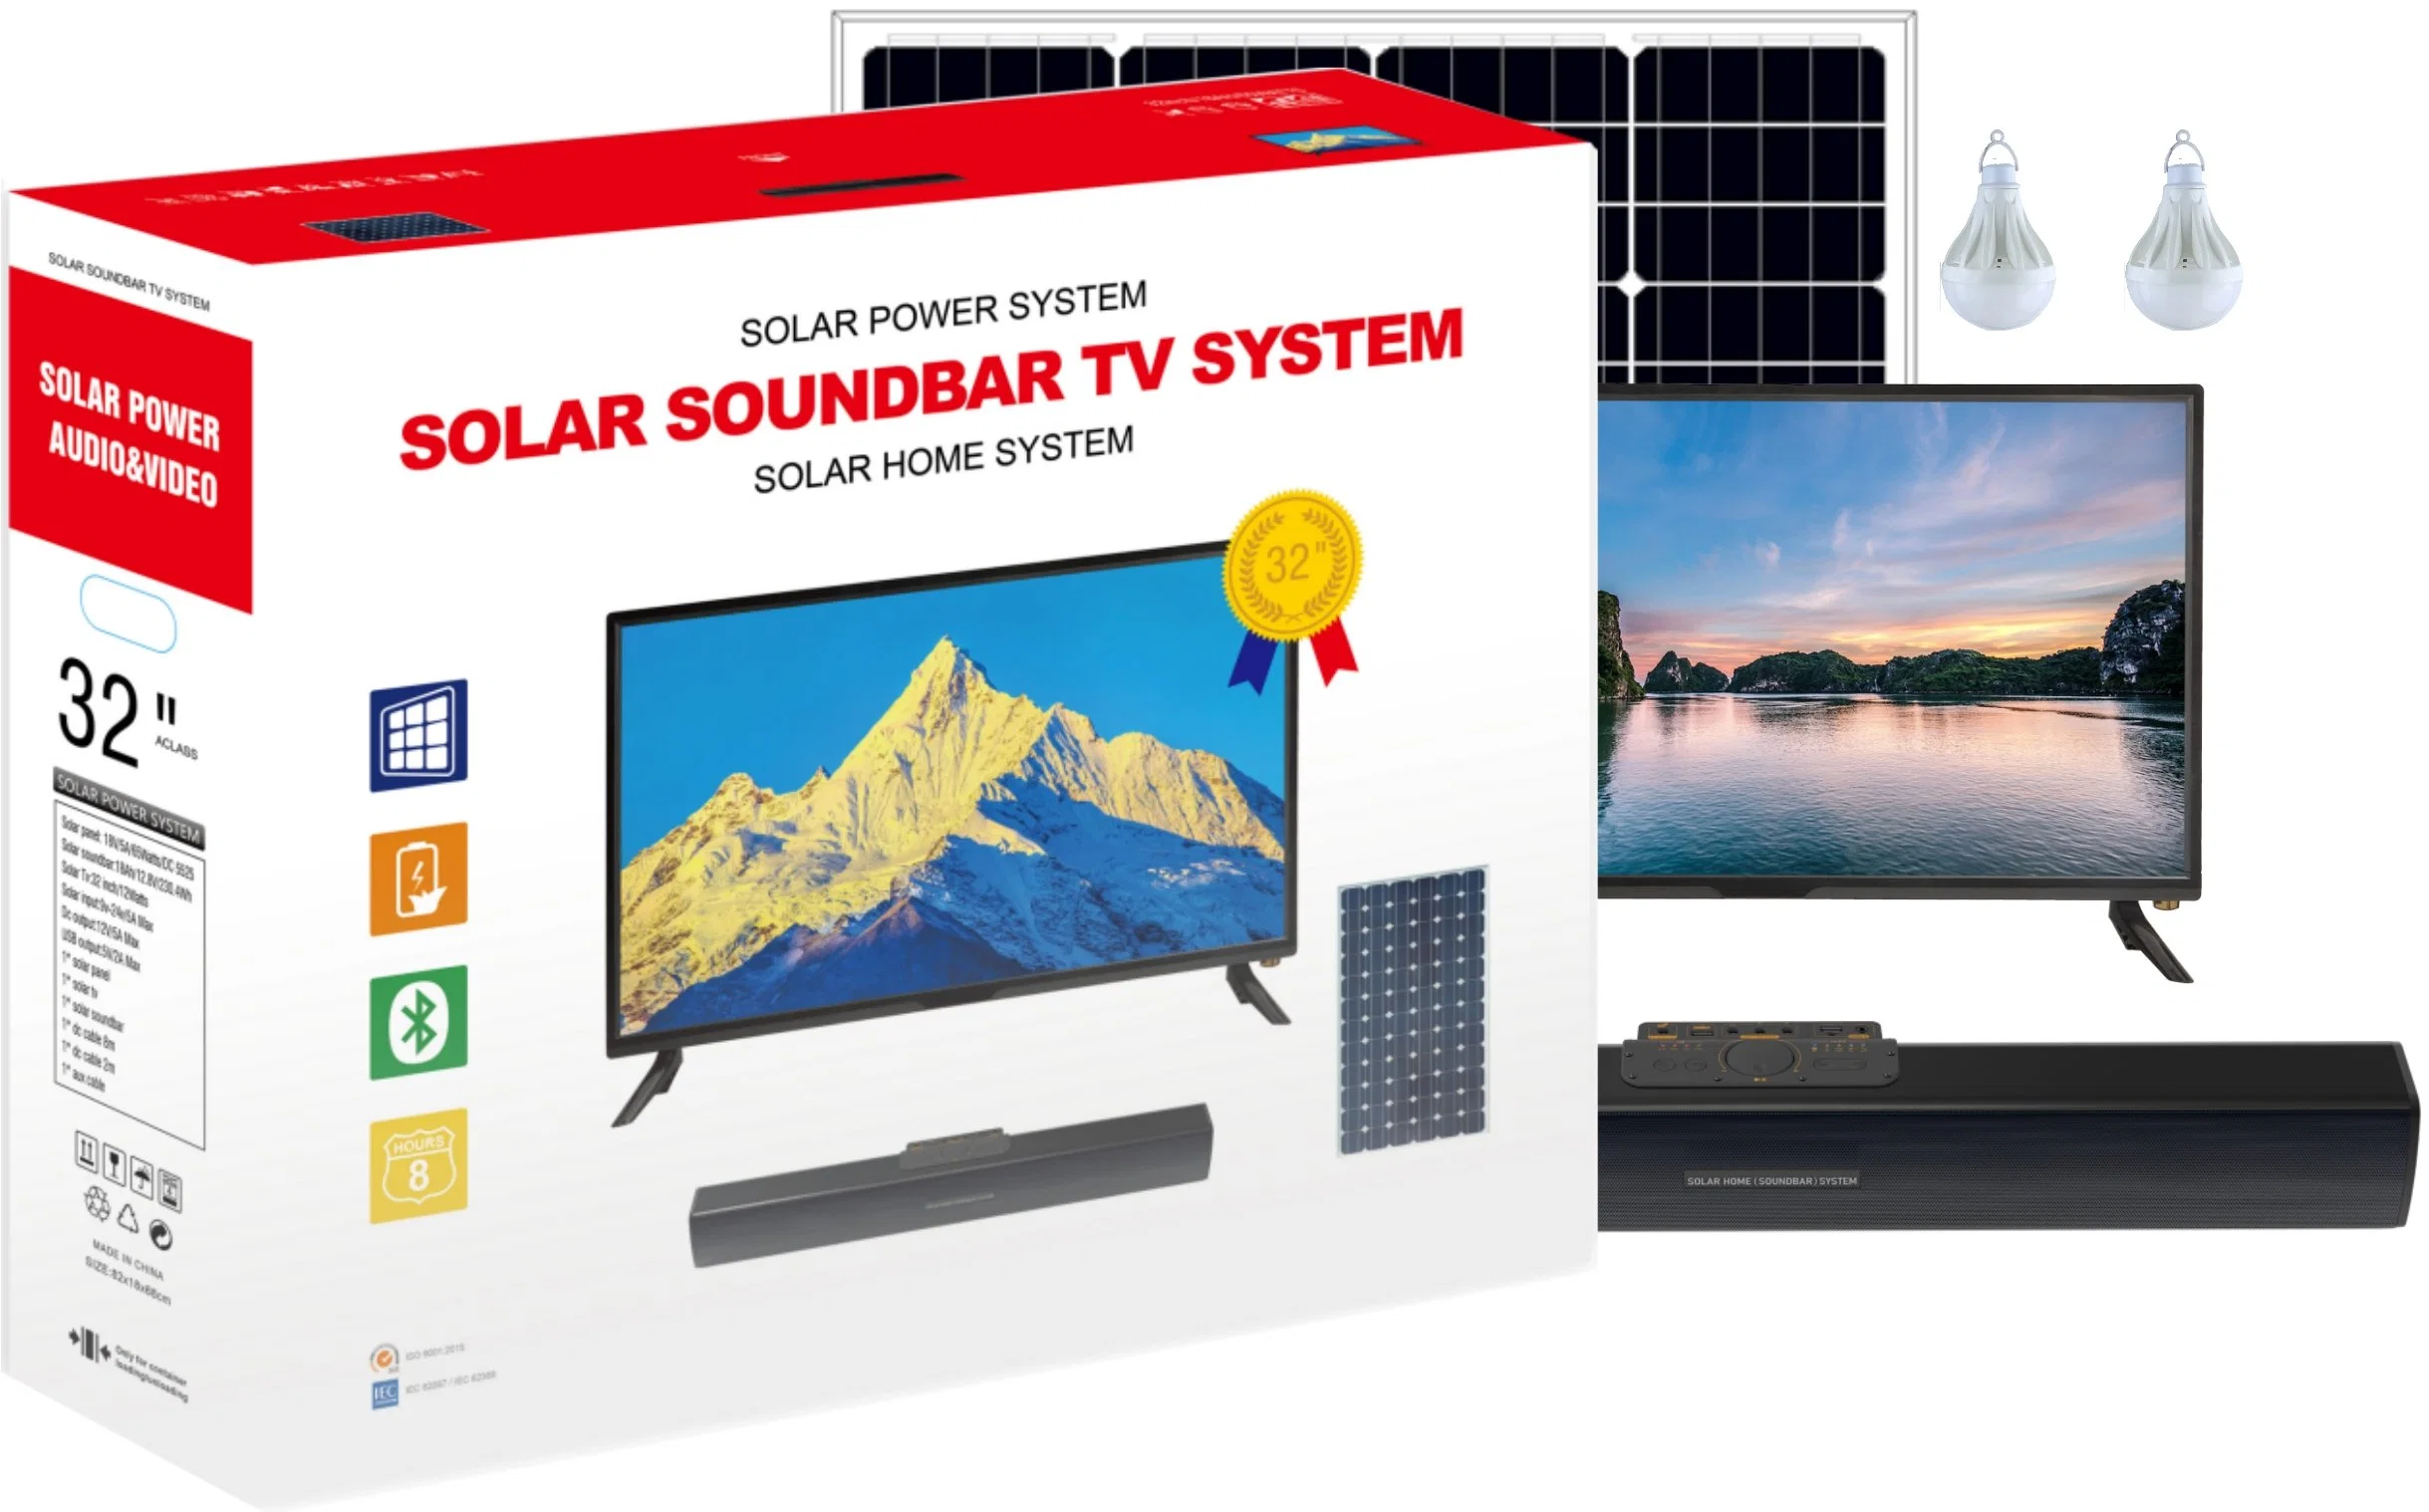 Pcv Solar Sound-Bar TV System for Home Electricity Supply 32 Inch Low Energy Consumption TV + Energy Storage HiFi Quality Soundbar